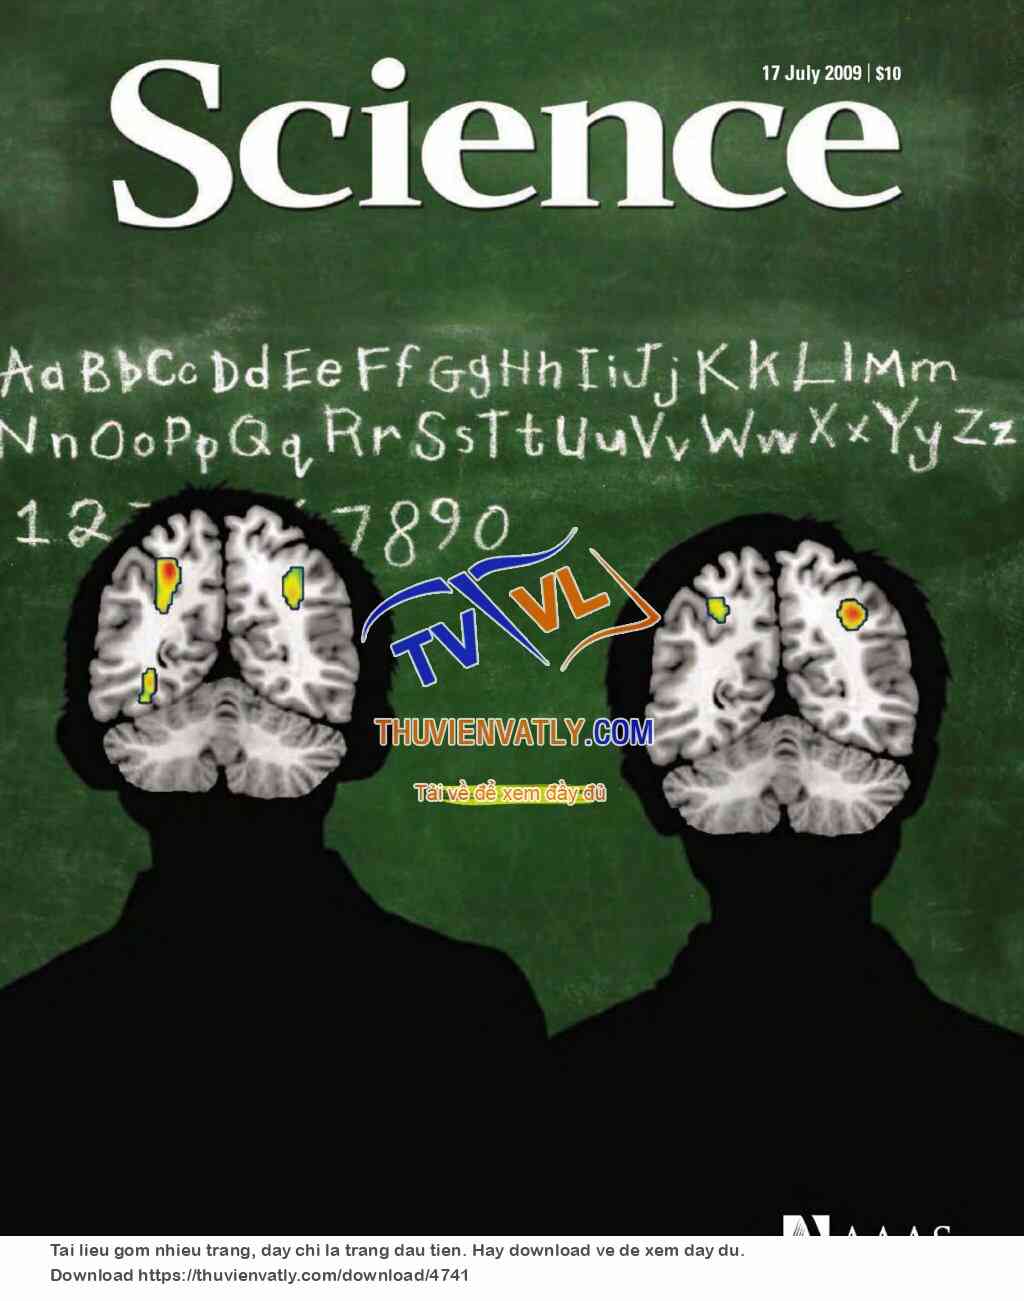 Science, July 17 2009 (Vol 325)